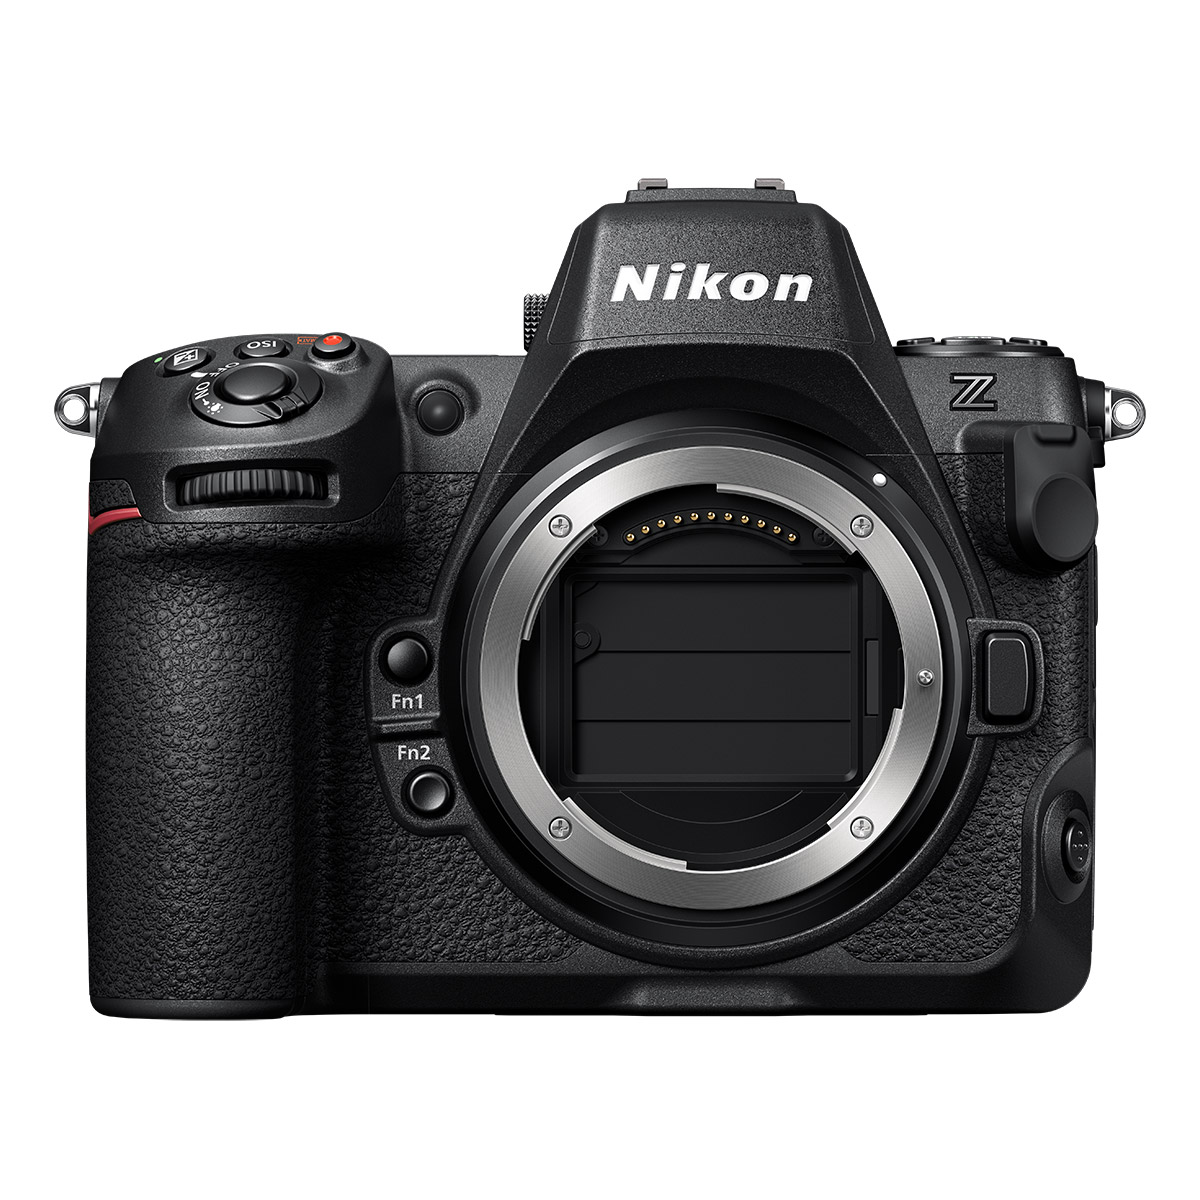 Nikon Z8 Front View no body cap product shot